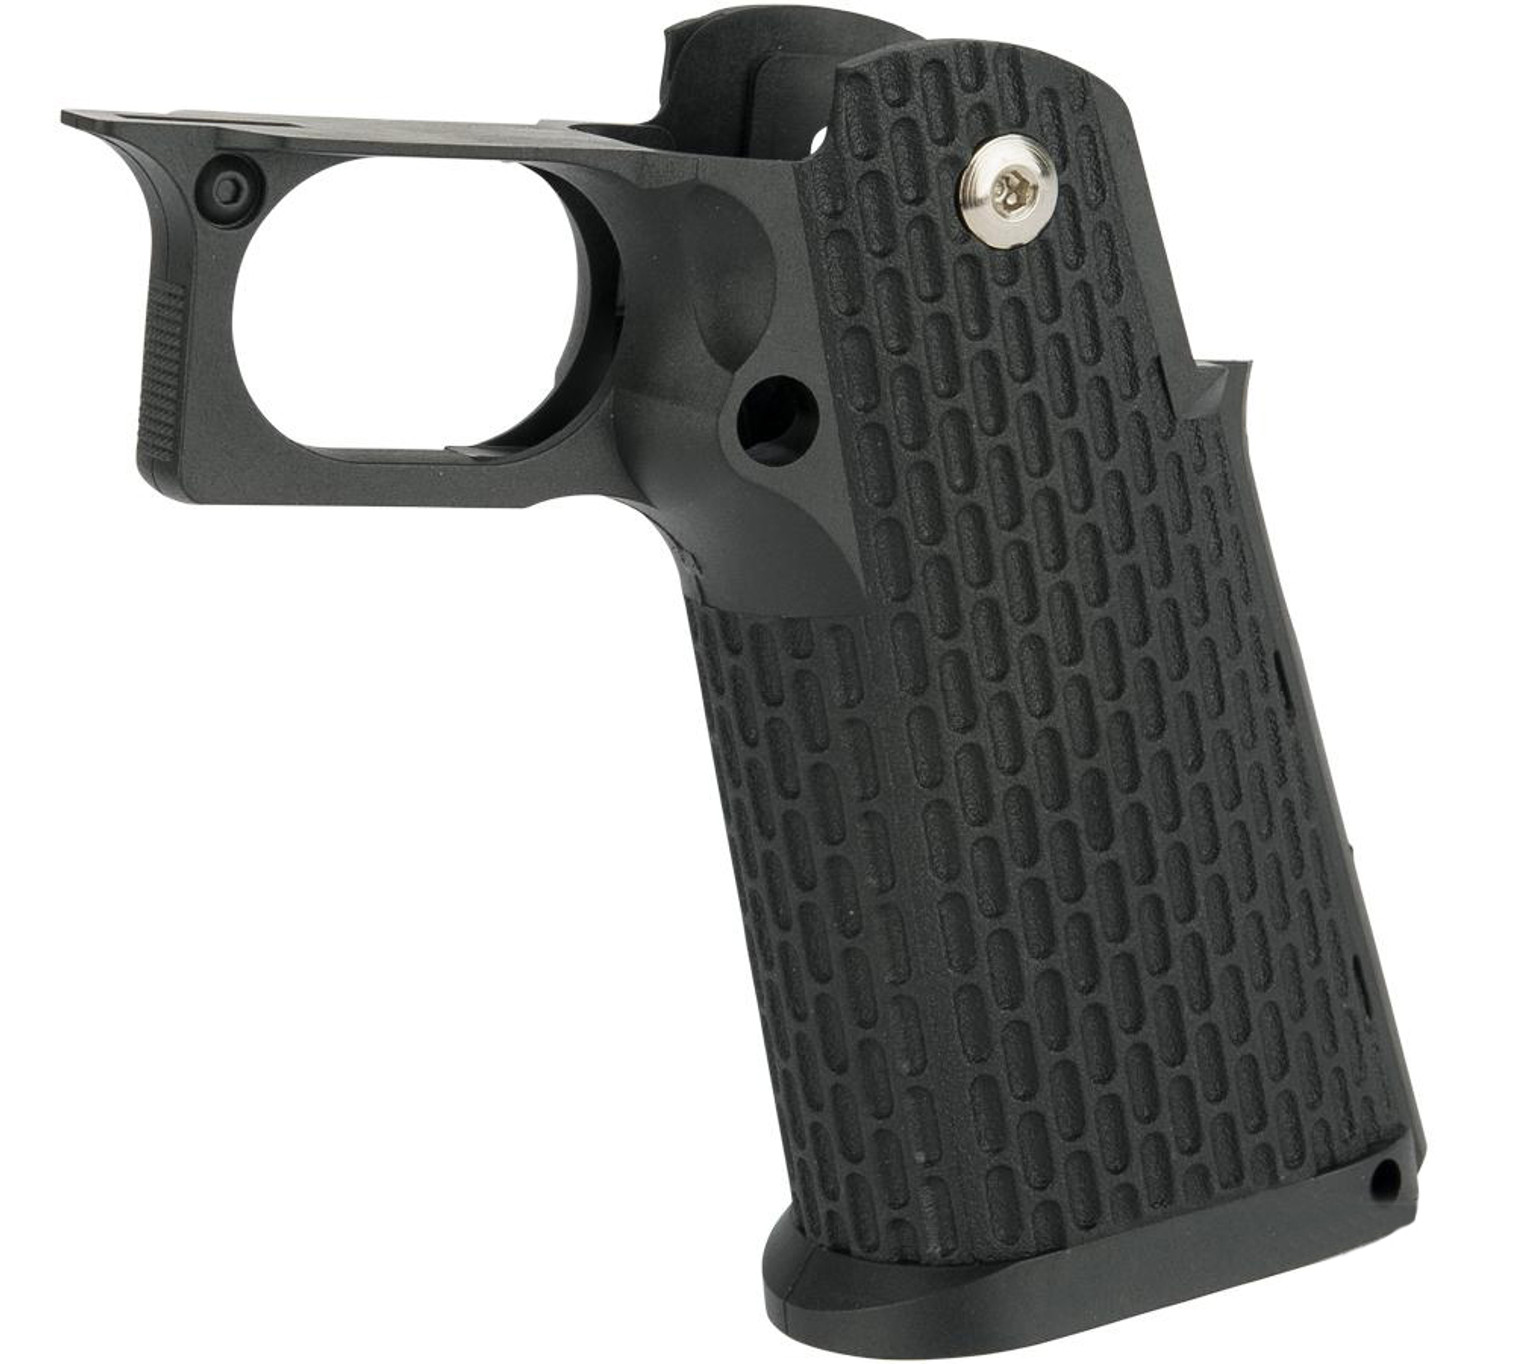 KJW Polymer Hi-Capa Pistol Grip with Integrated Trigger Guard